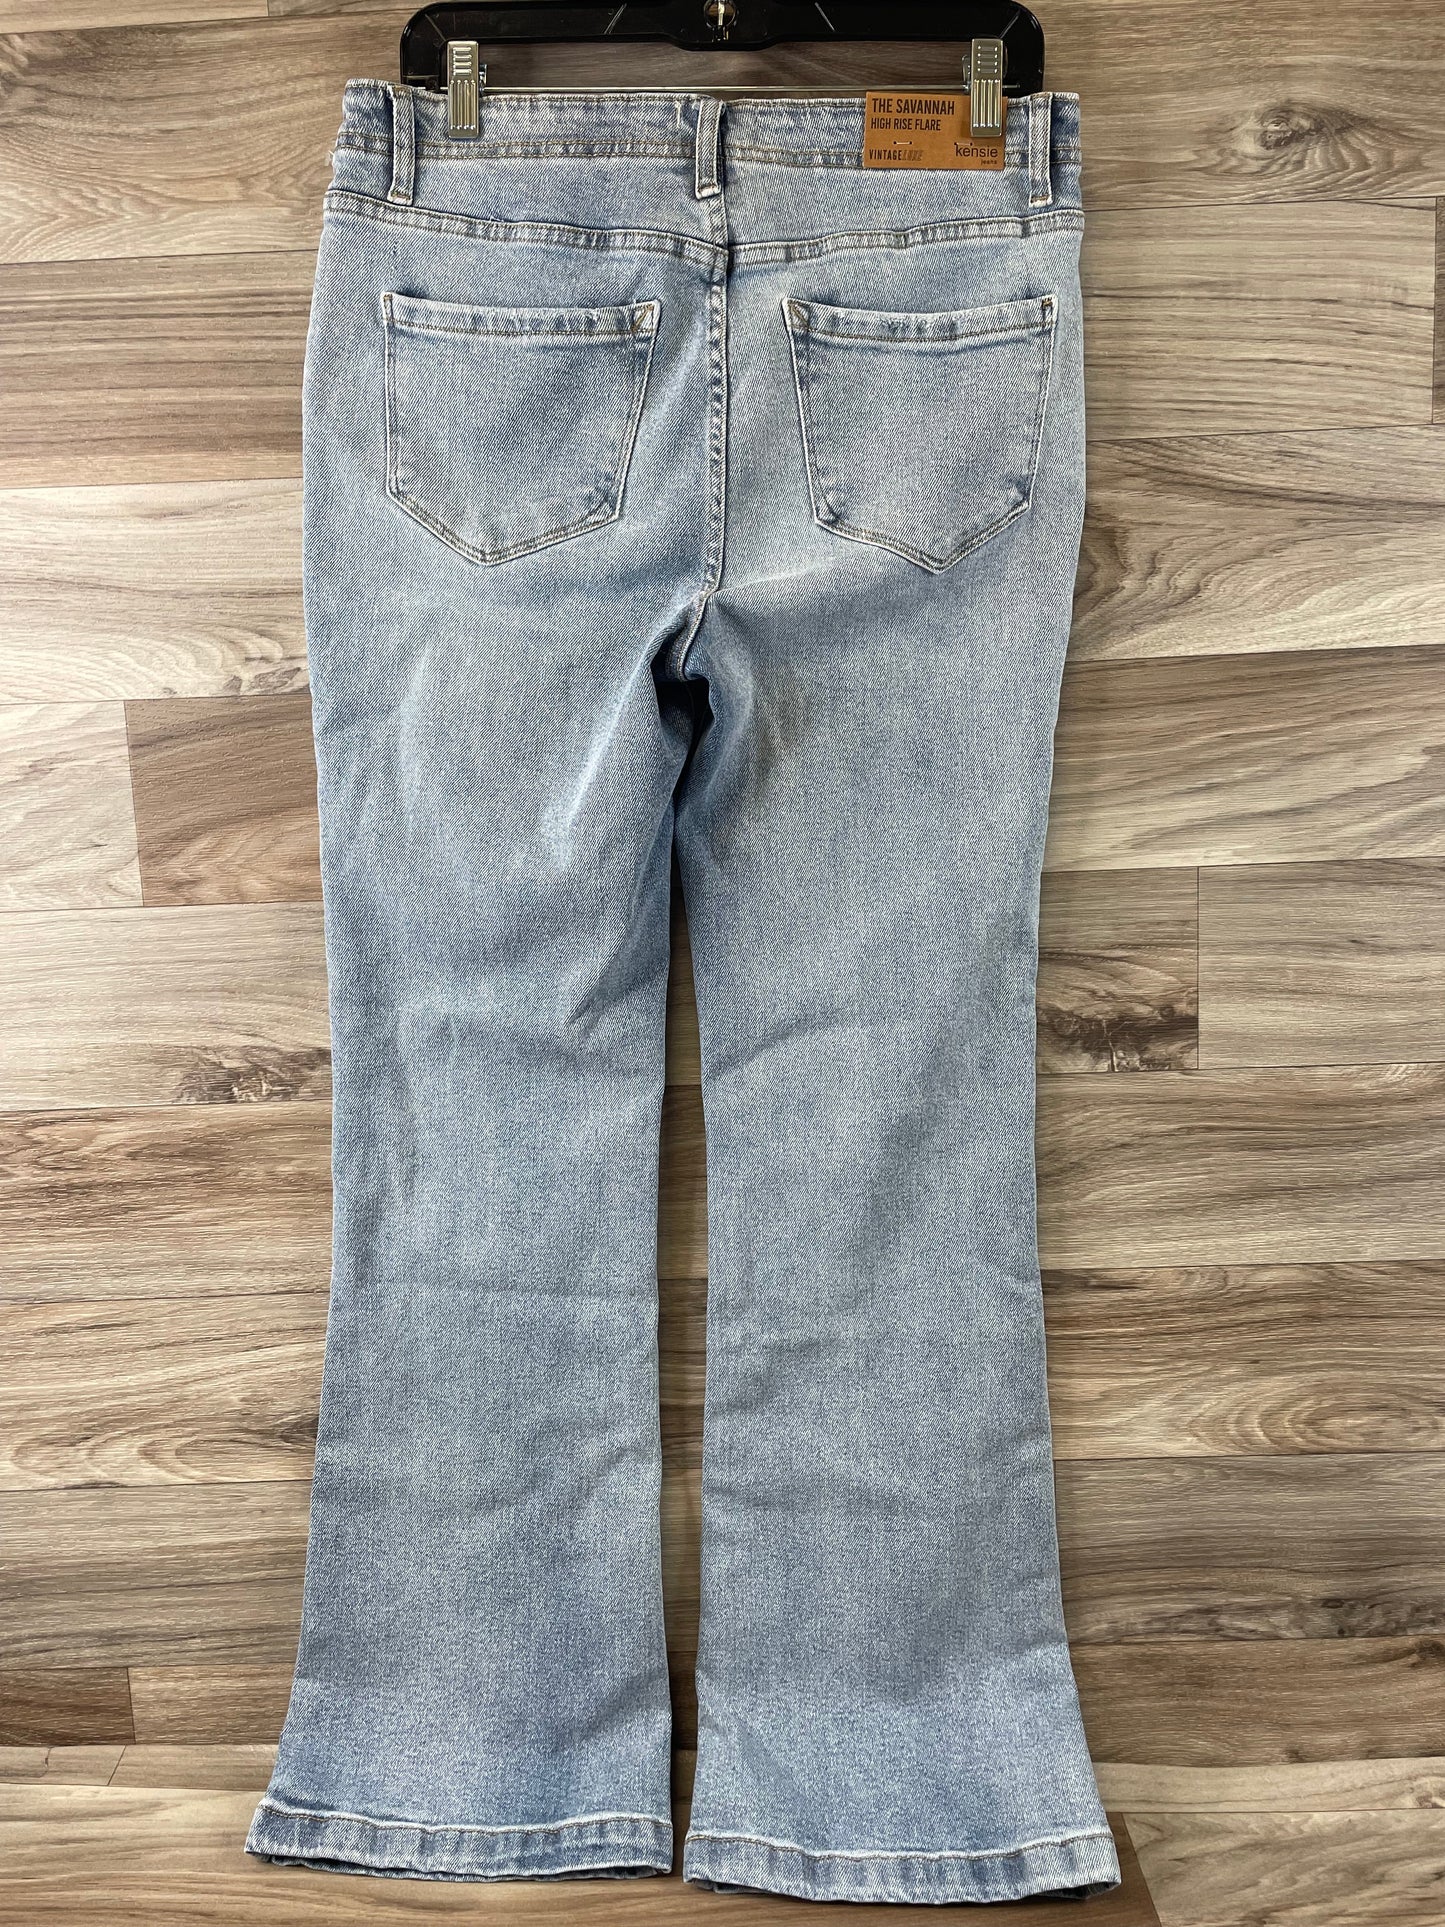 Blue Denim Jeans Flared Kensie, Size 8